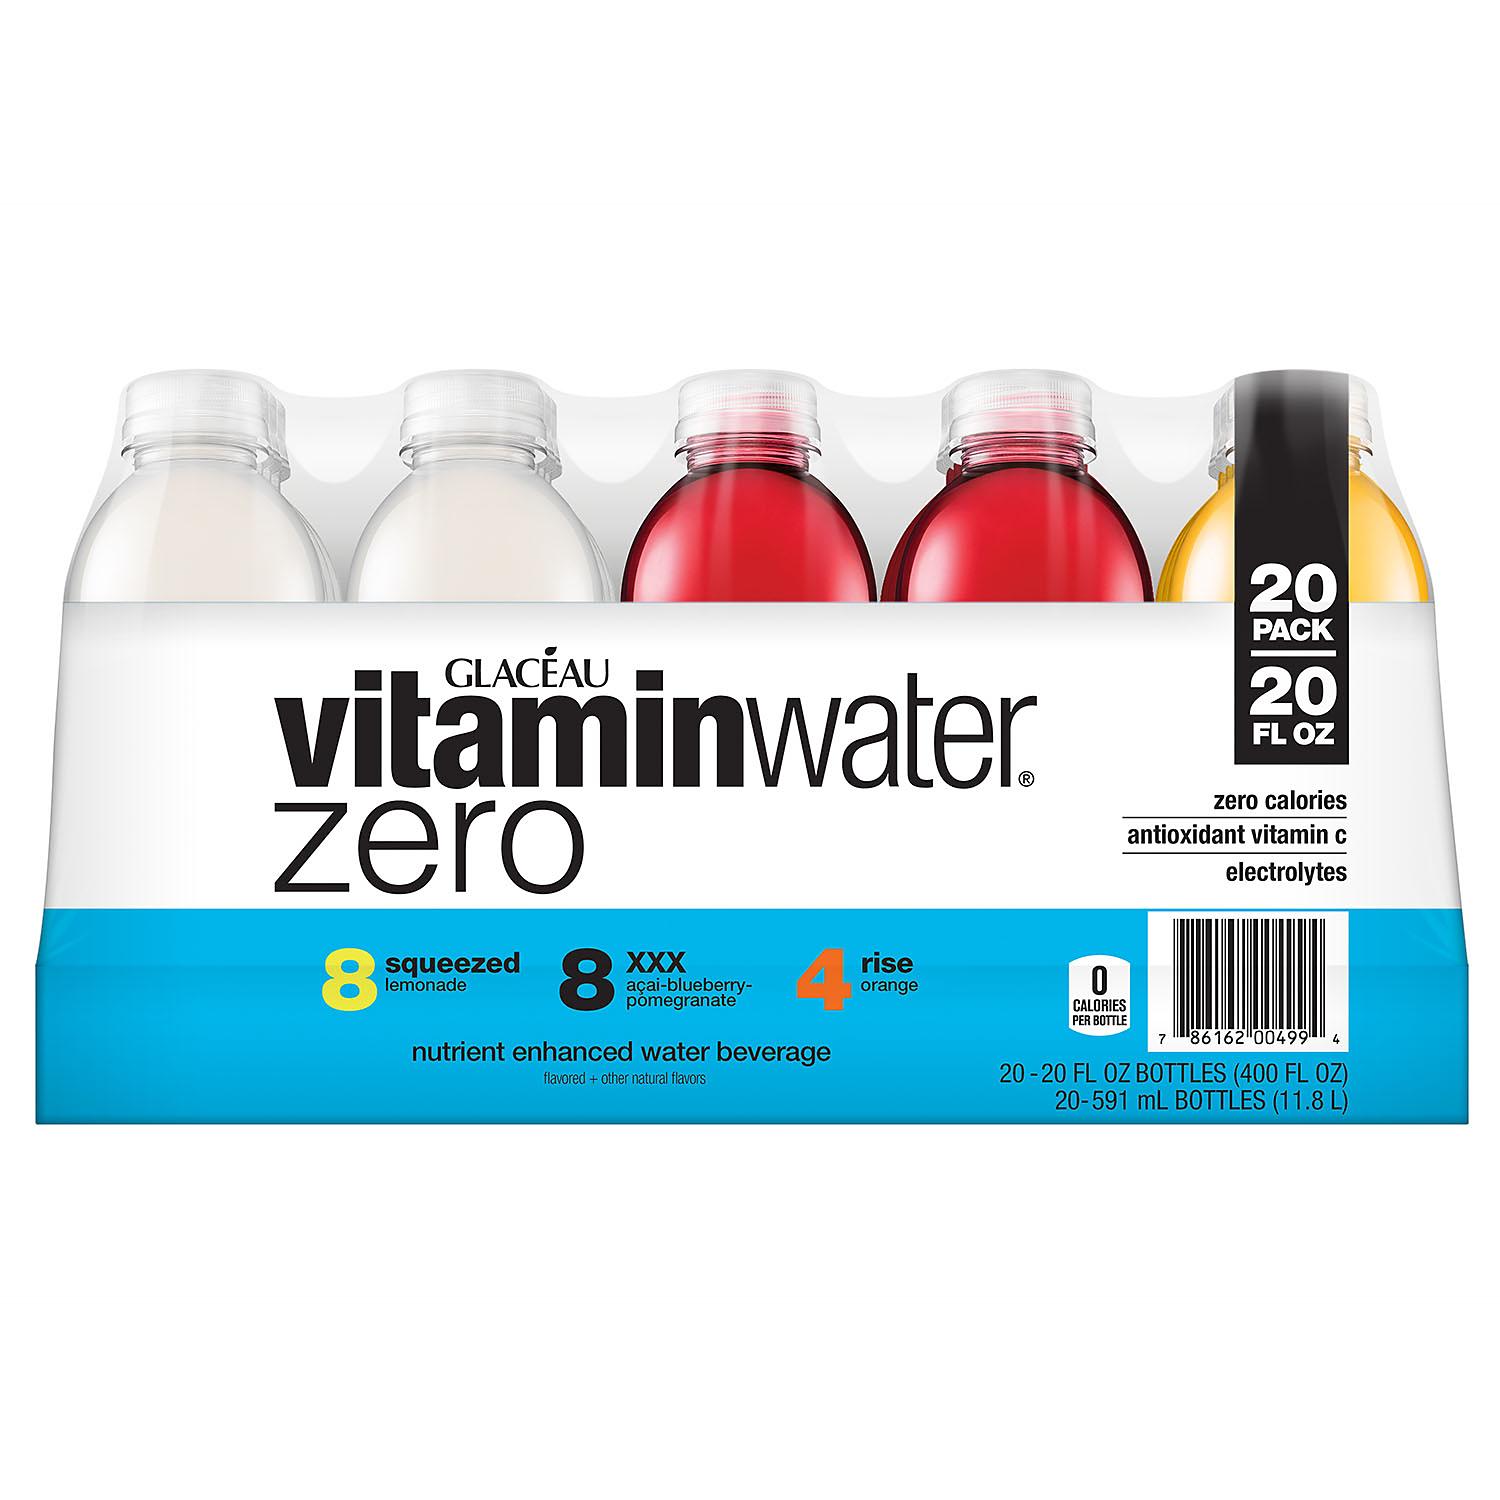 Glaceau Vitamin Water Zero Variety Pack - 20oz/20pk